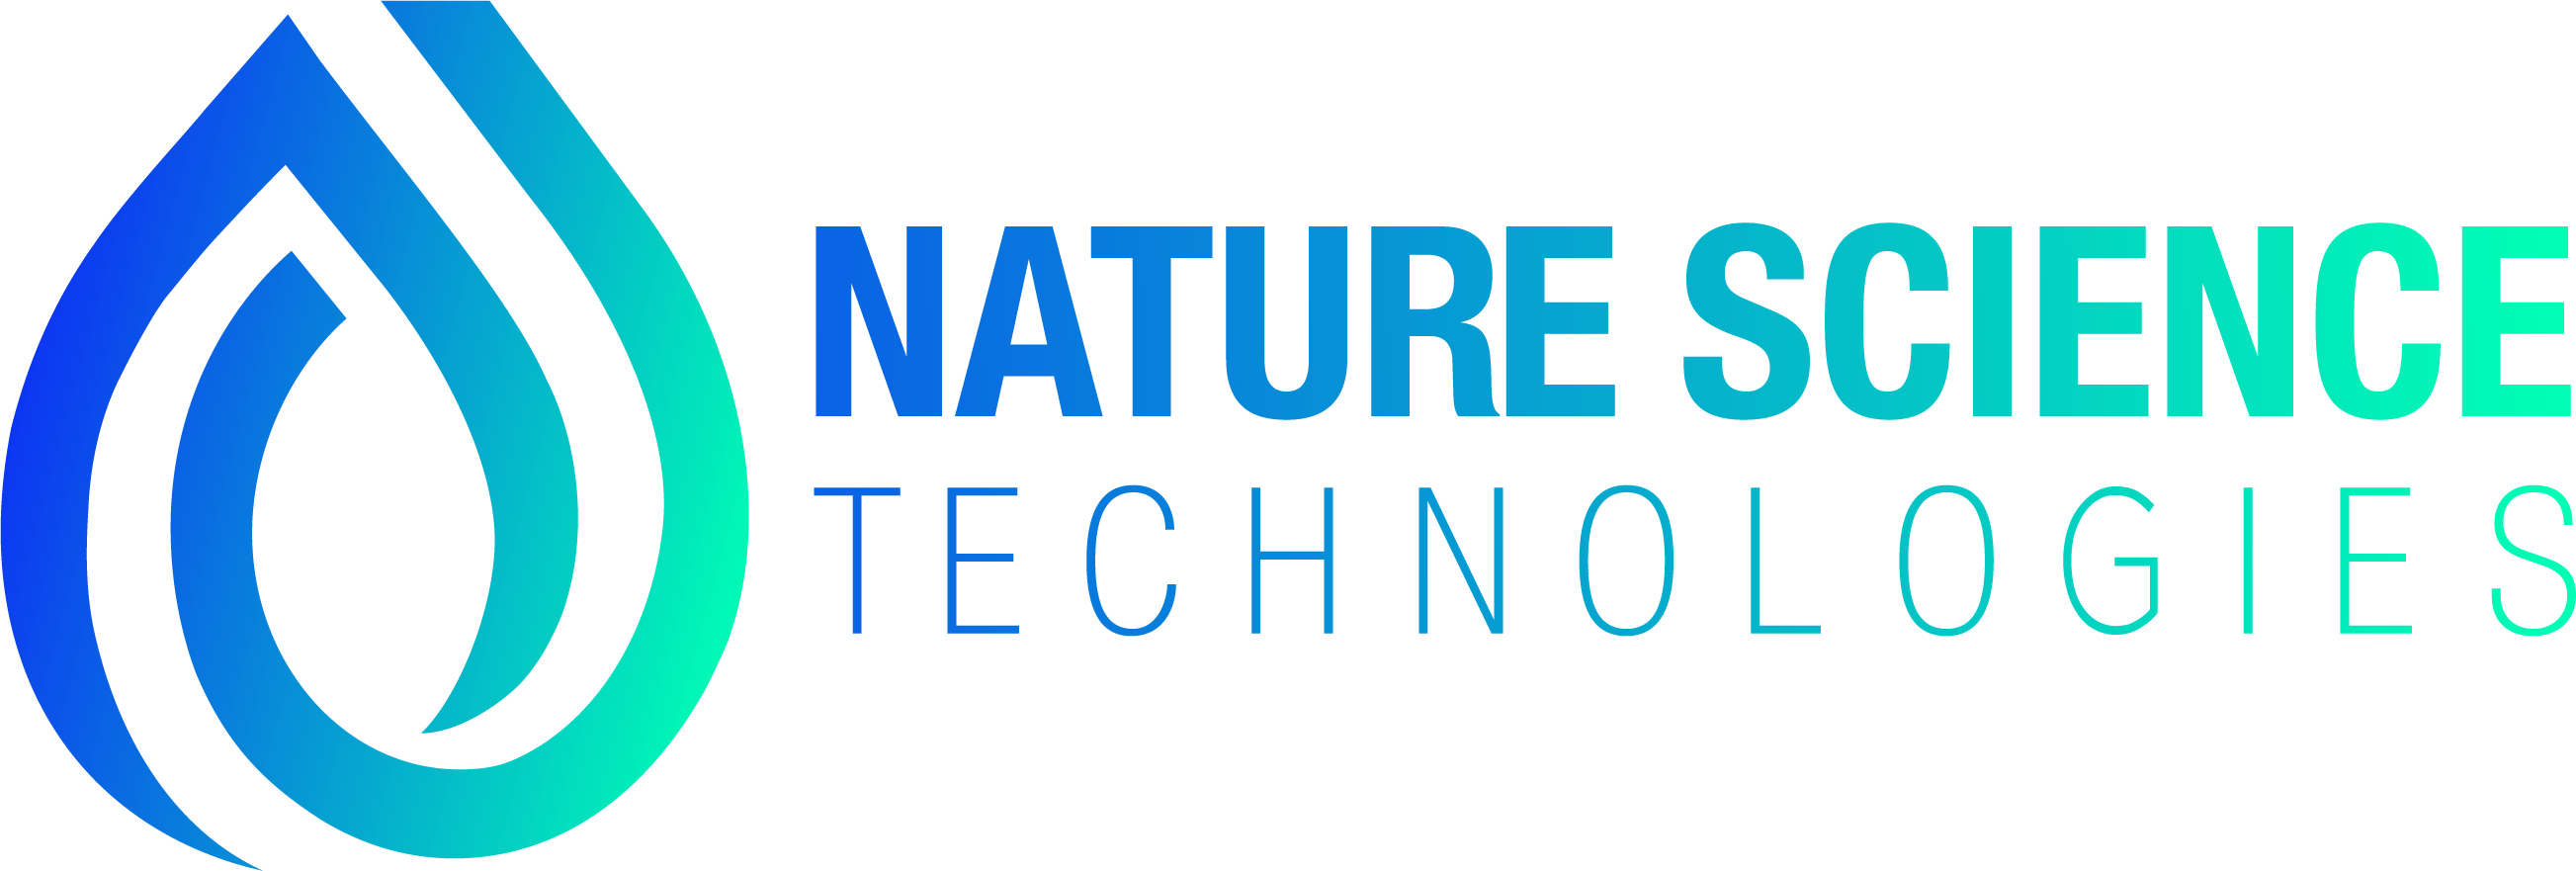 Nature Science Technologies Ltd logo